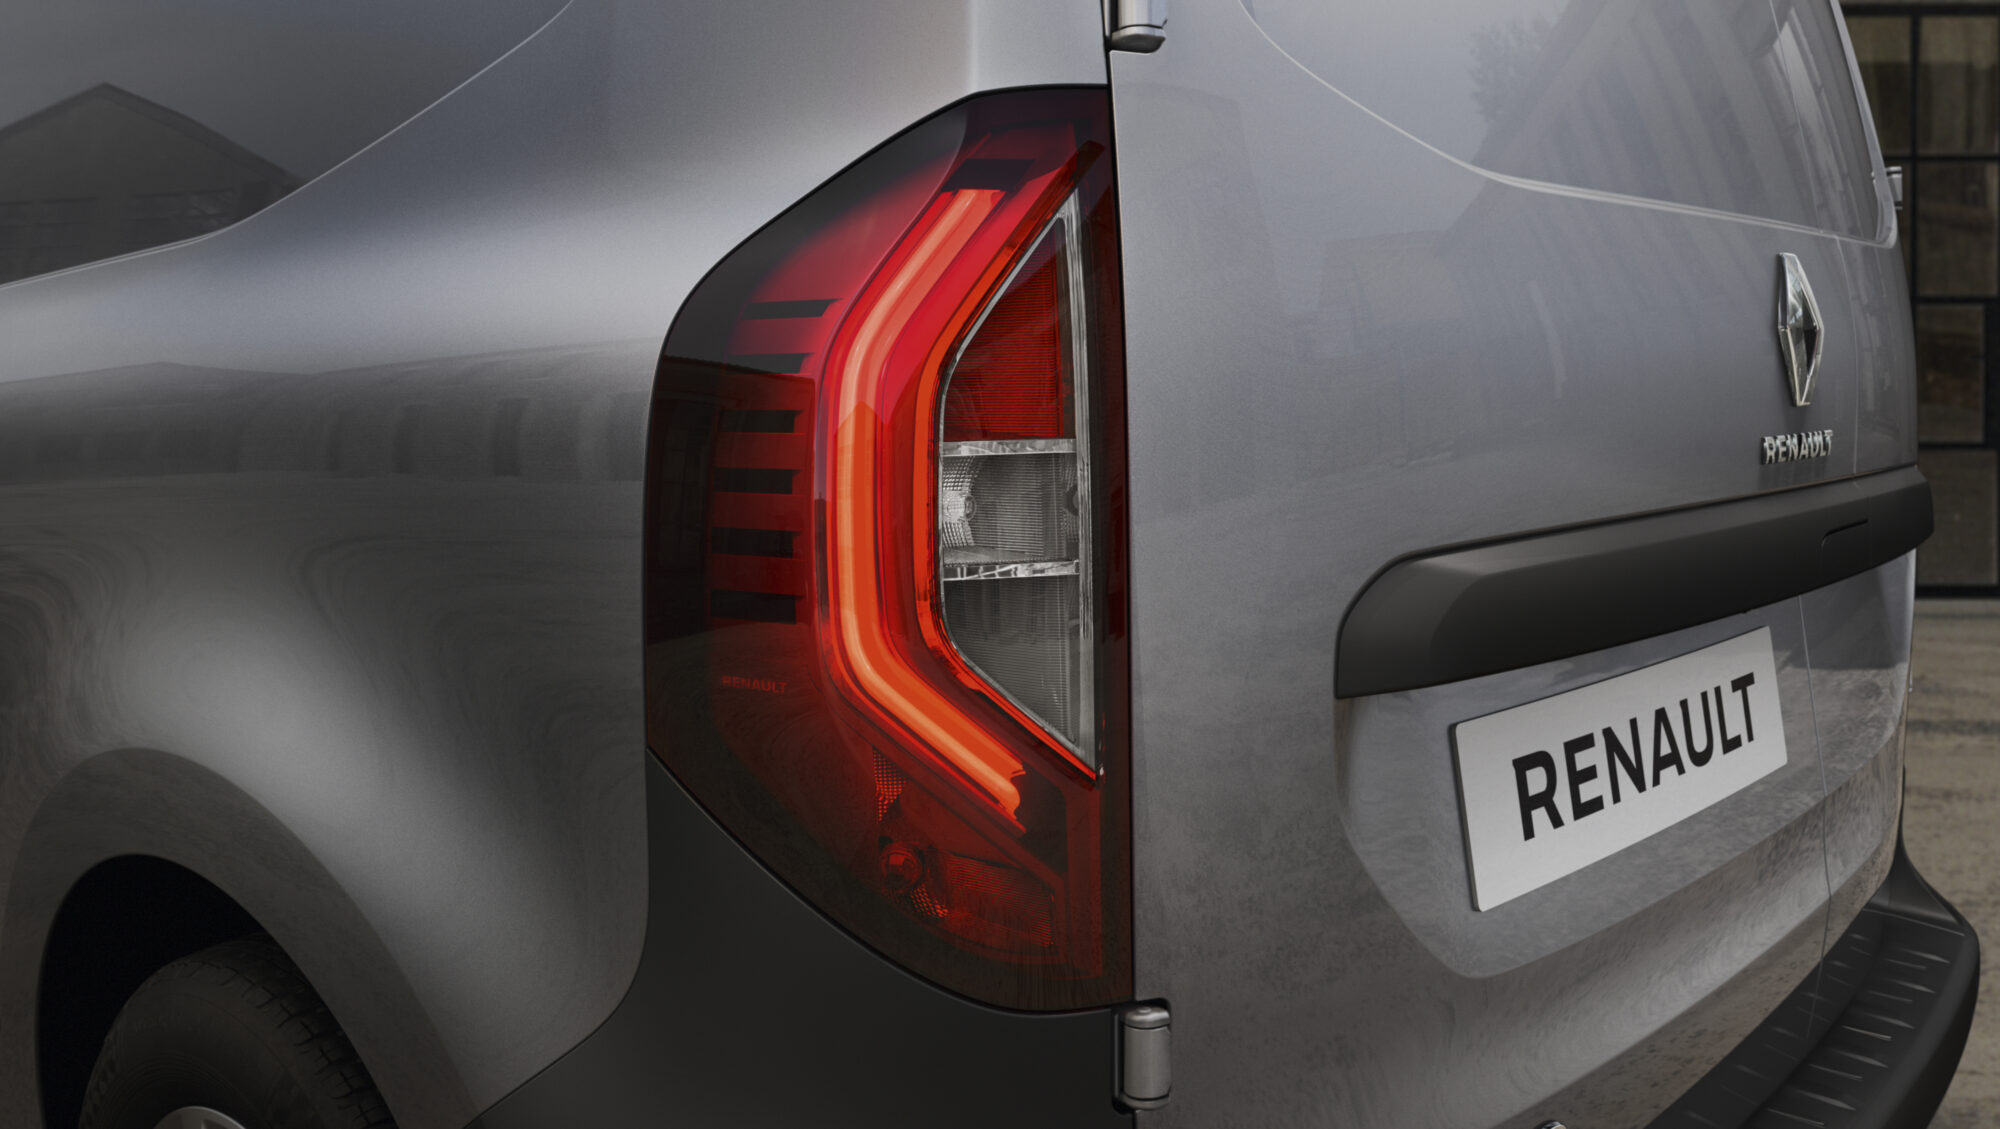 2021 - Nouveau Renault Kangoo Van en situation